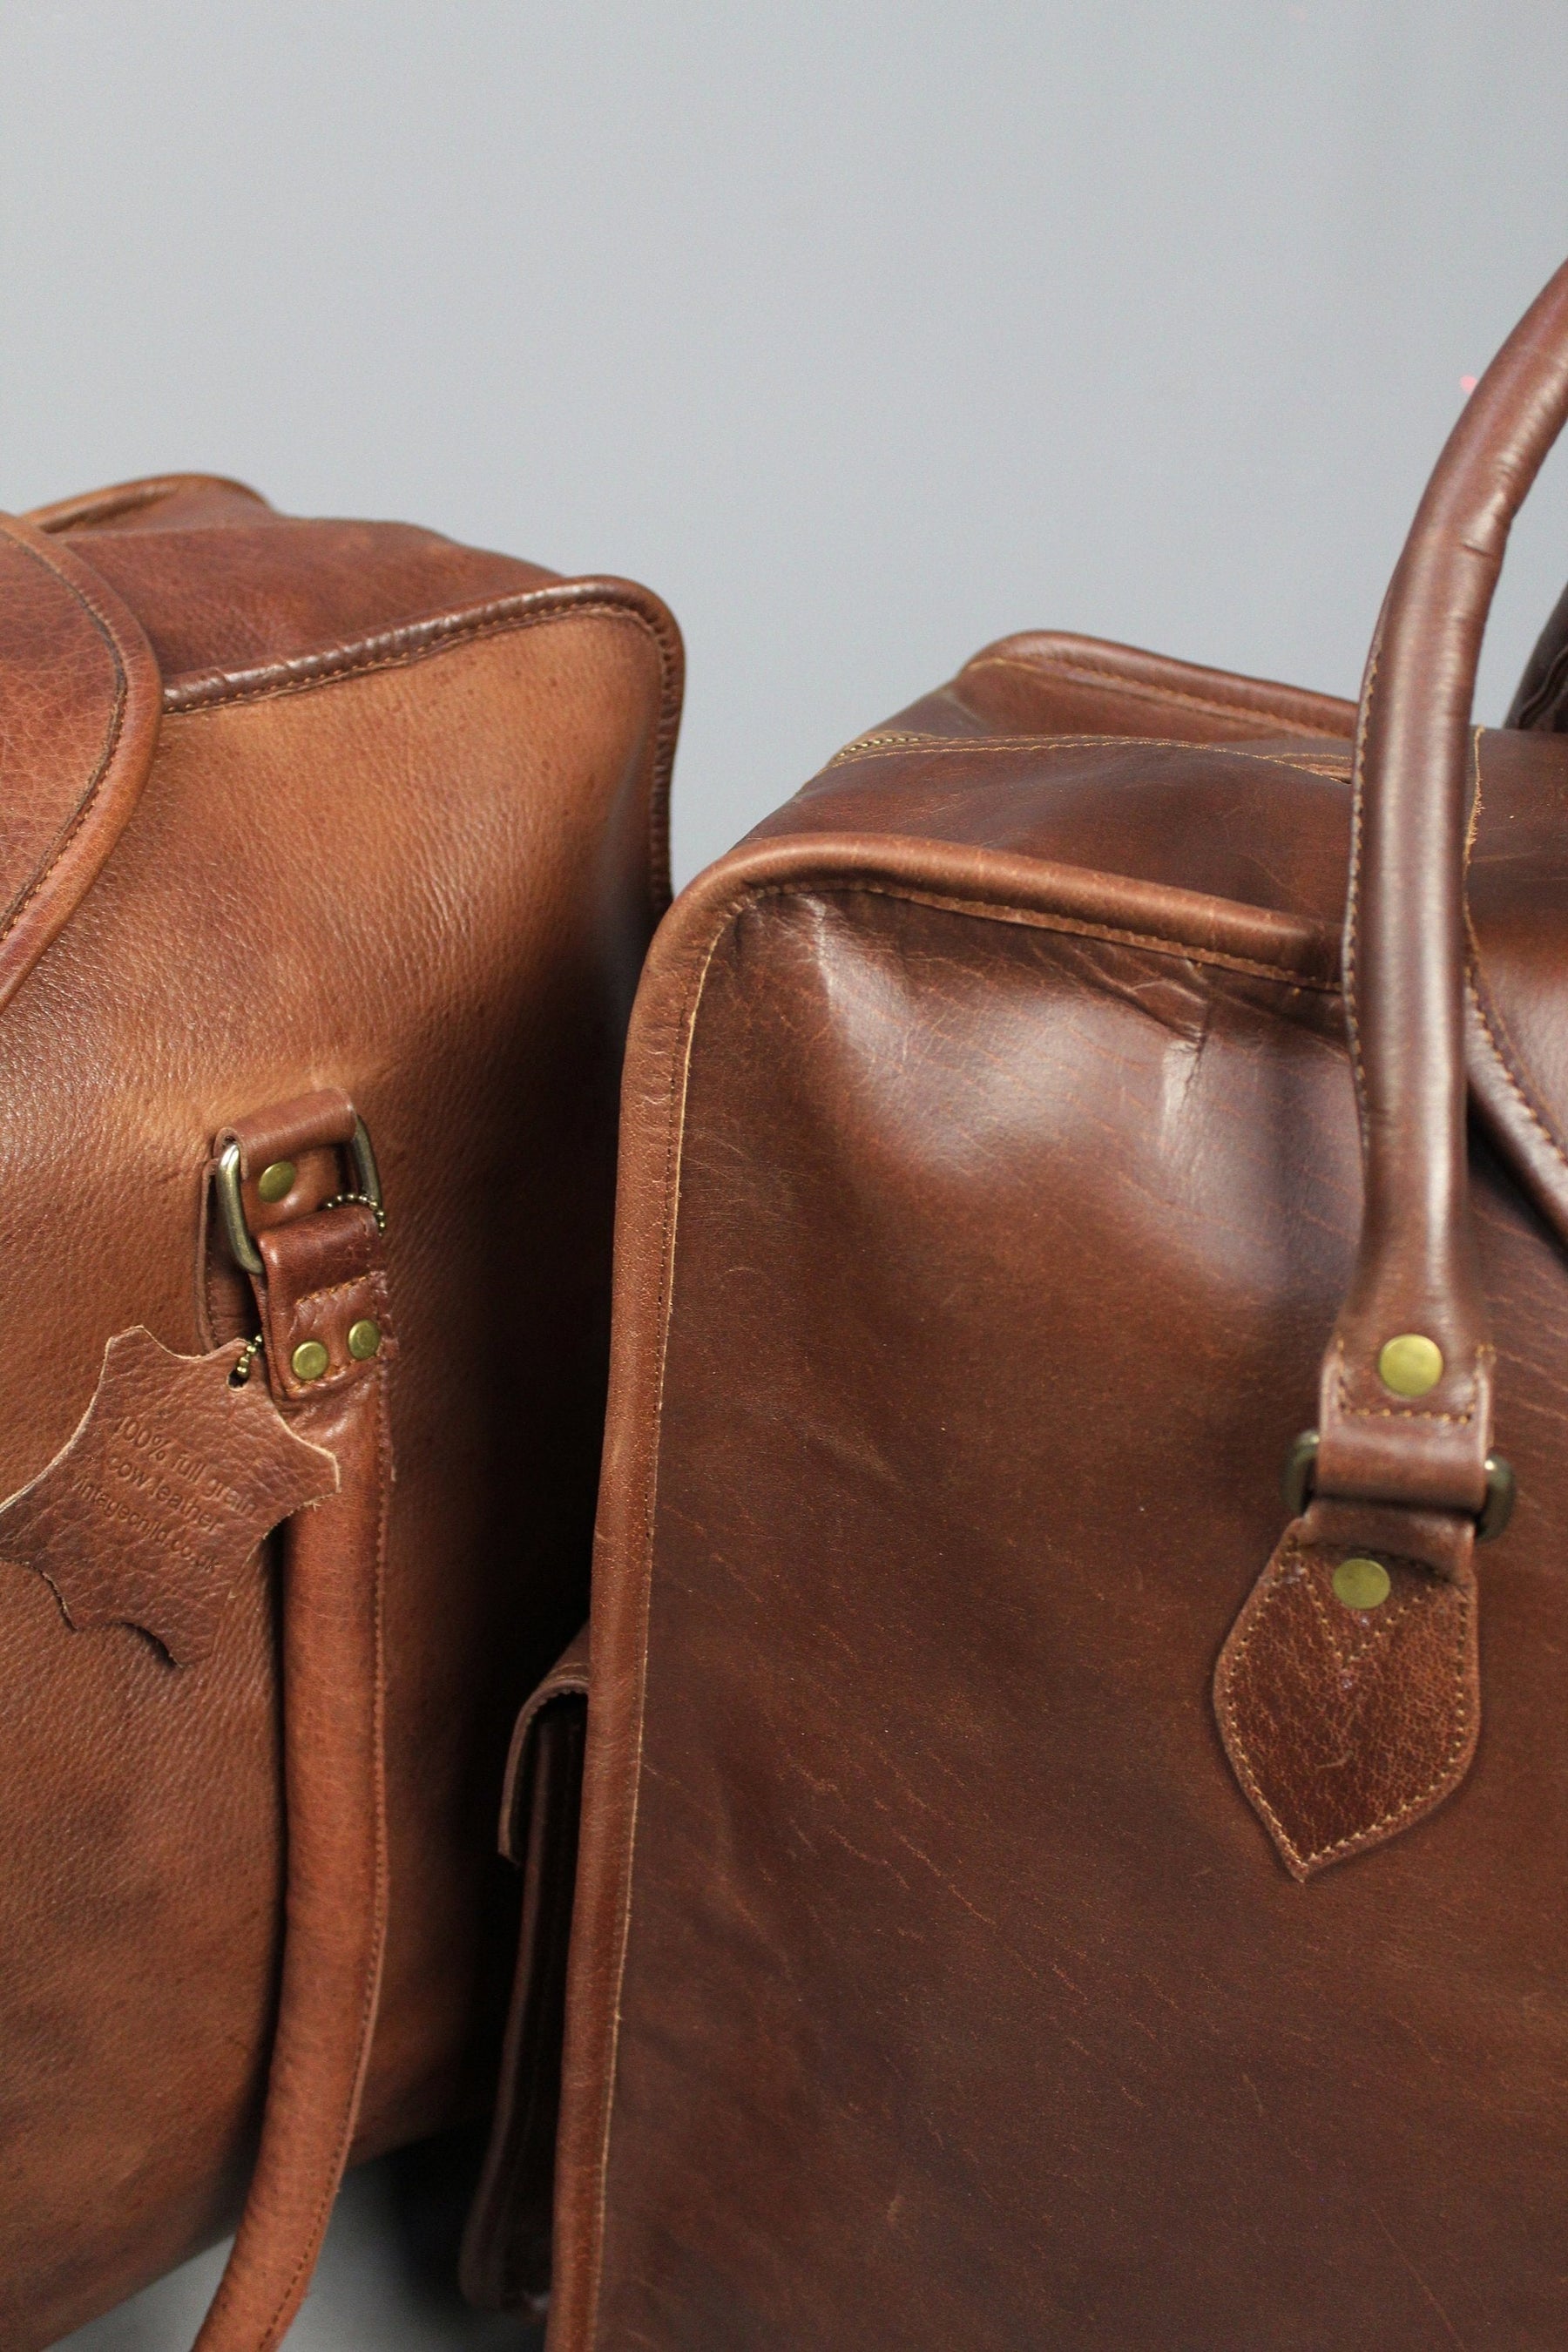 Council Travel Bag - Genuine Brown Leather - Bricks Masons